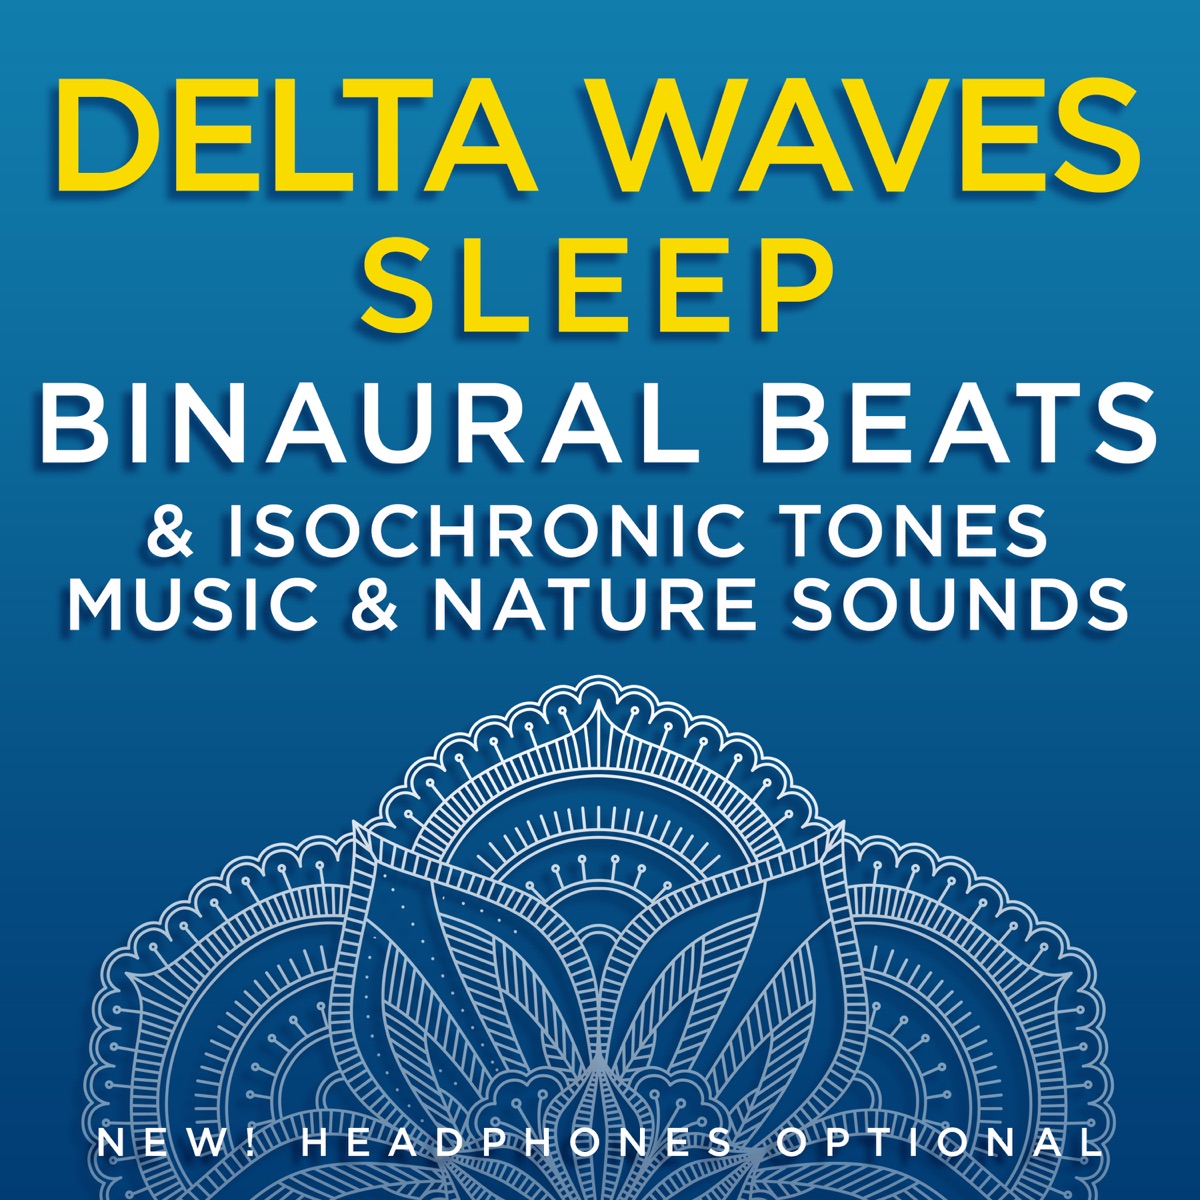 Delta Waves Sleep Binaural Beats & Isochronic Tones Music & Nature Sounds -  Album by Binaural Beats Research & David & Steve Gordon - Apple Music